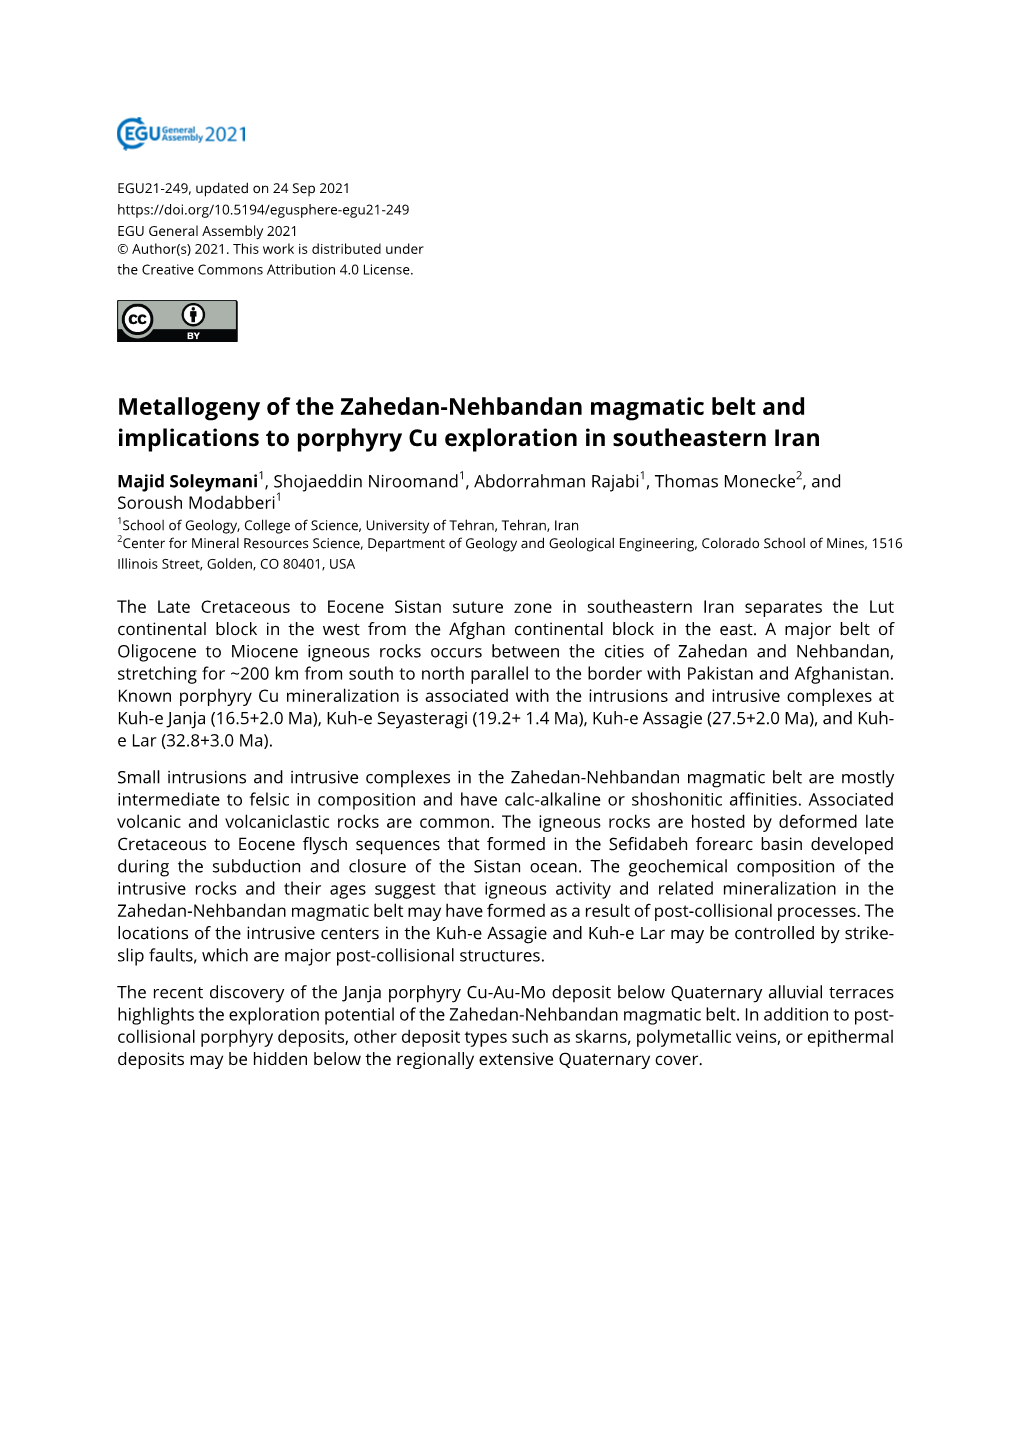 Metallogeny of the Zahedan-Nehbandan Magmatic Belt and Implications to Porphyry Cu Exploration in Southeastern Iran